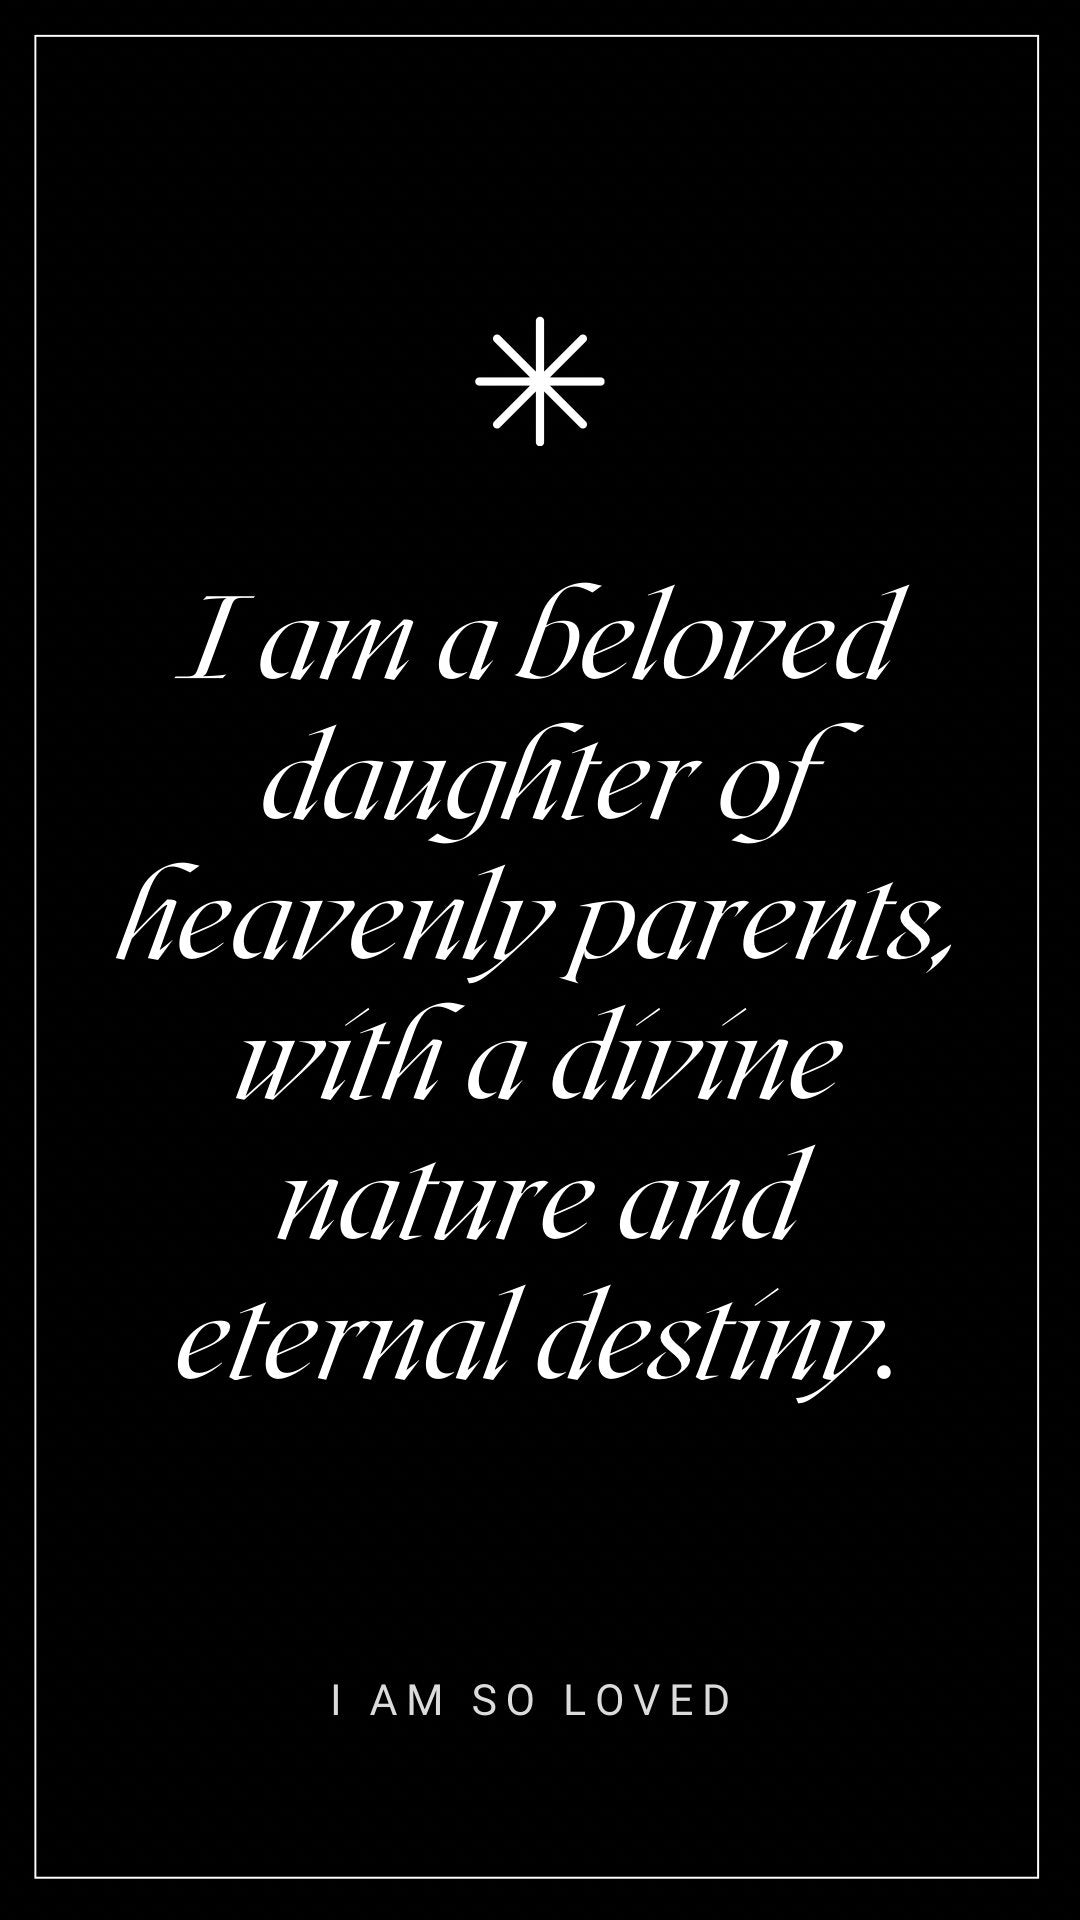 Beloved Daughter of Heavenly Parents Phone Wallpaper - Bee The Light